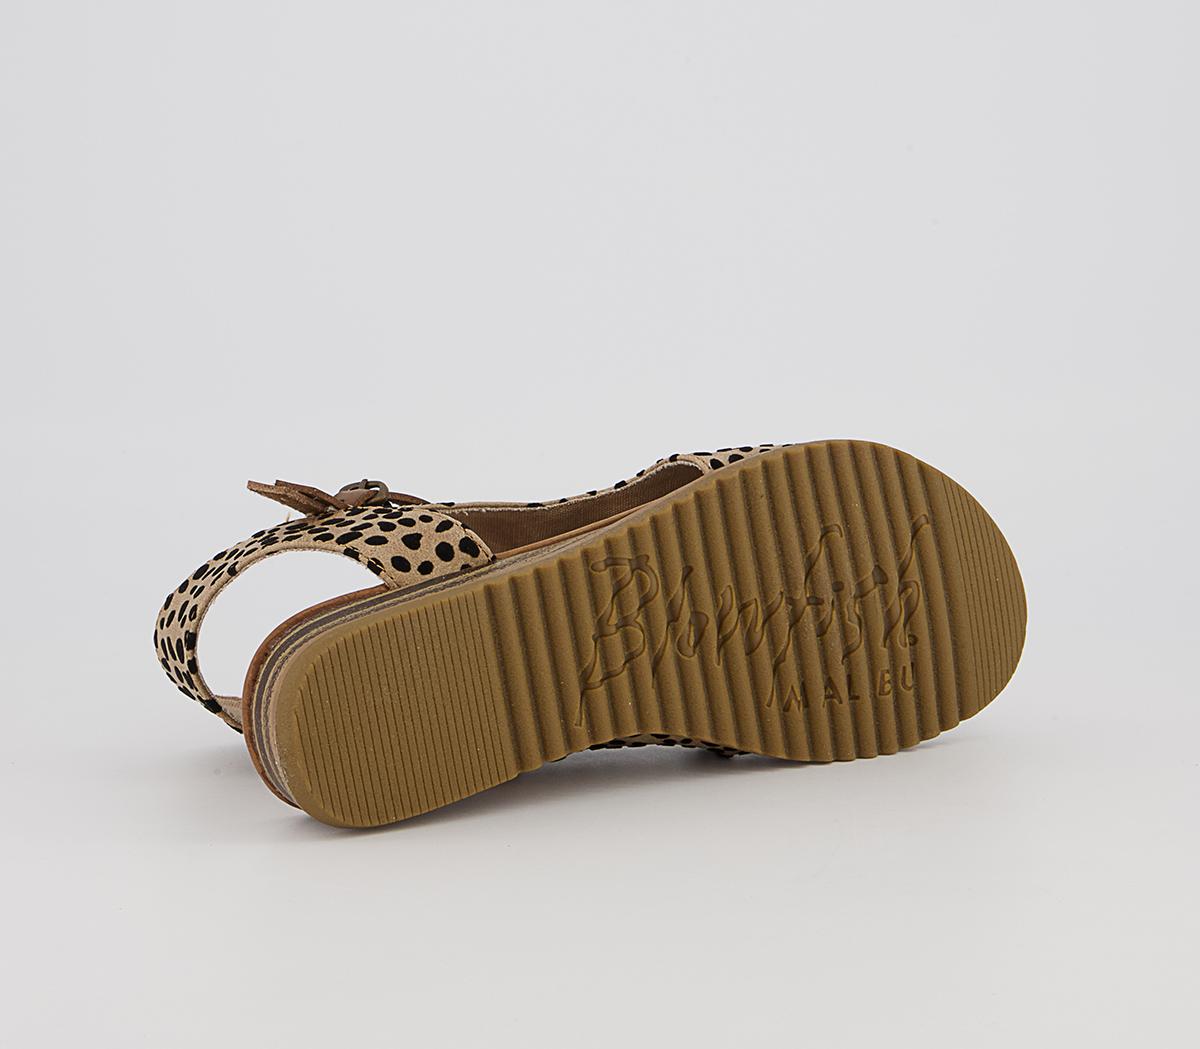 Blowfish Malibu Butterfly Slides Sand Pixie Leopard - Women's Vegan Shoes